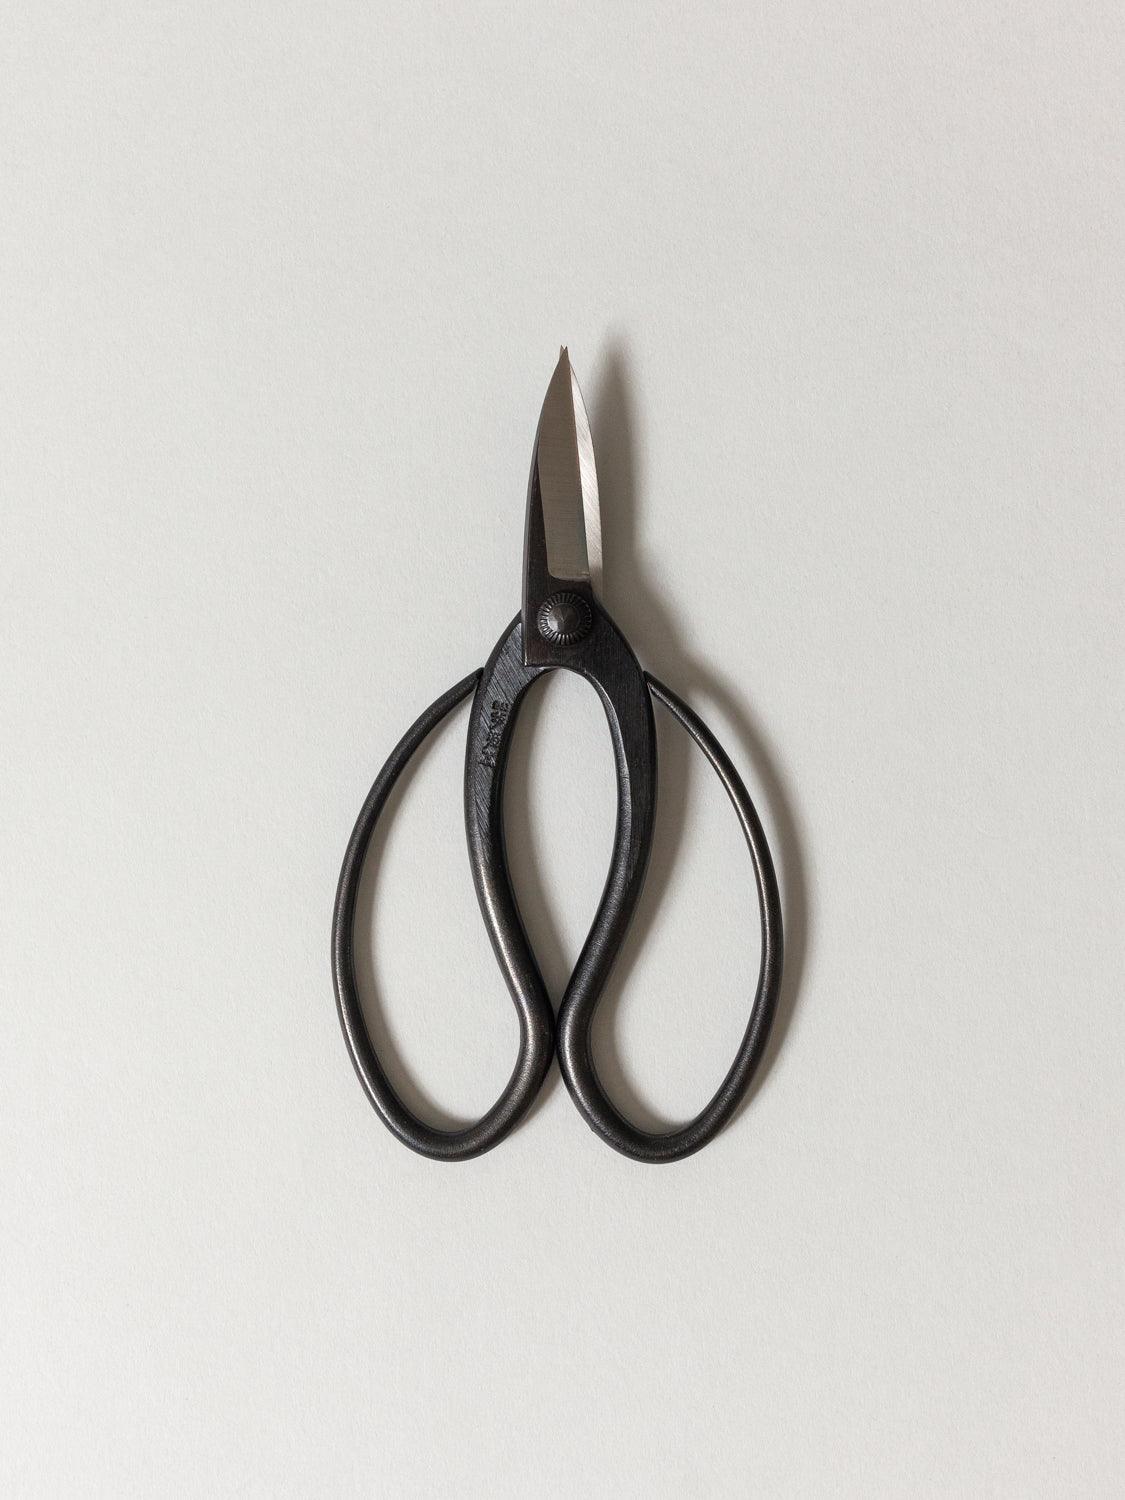 Okubo Gardening Scissors